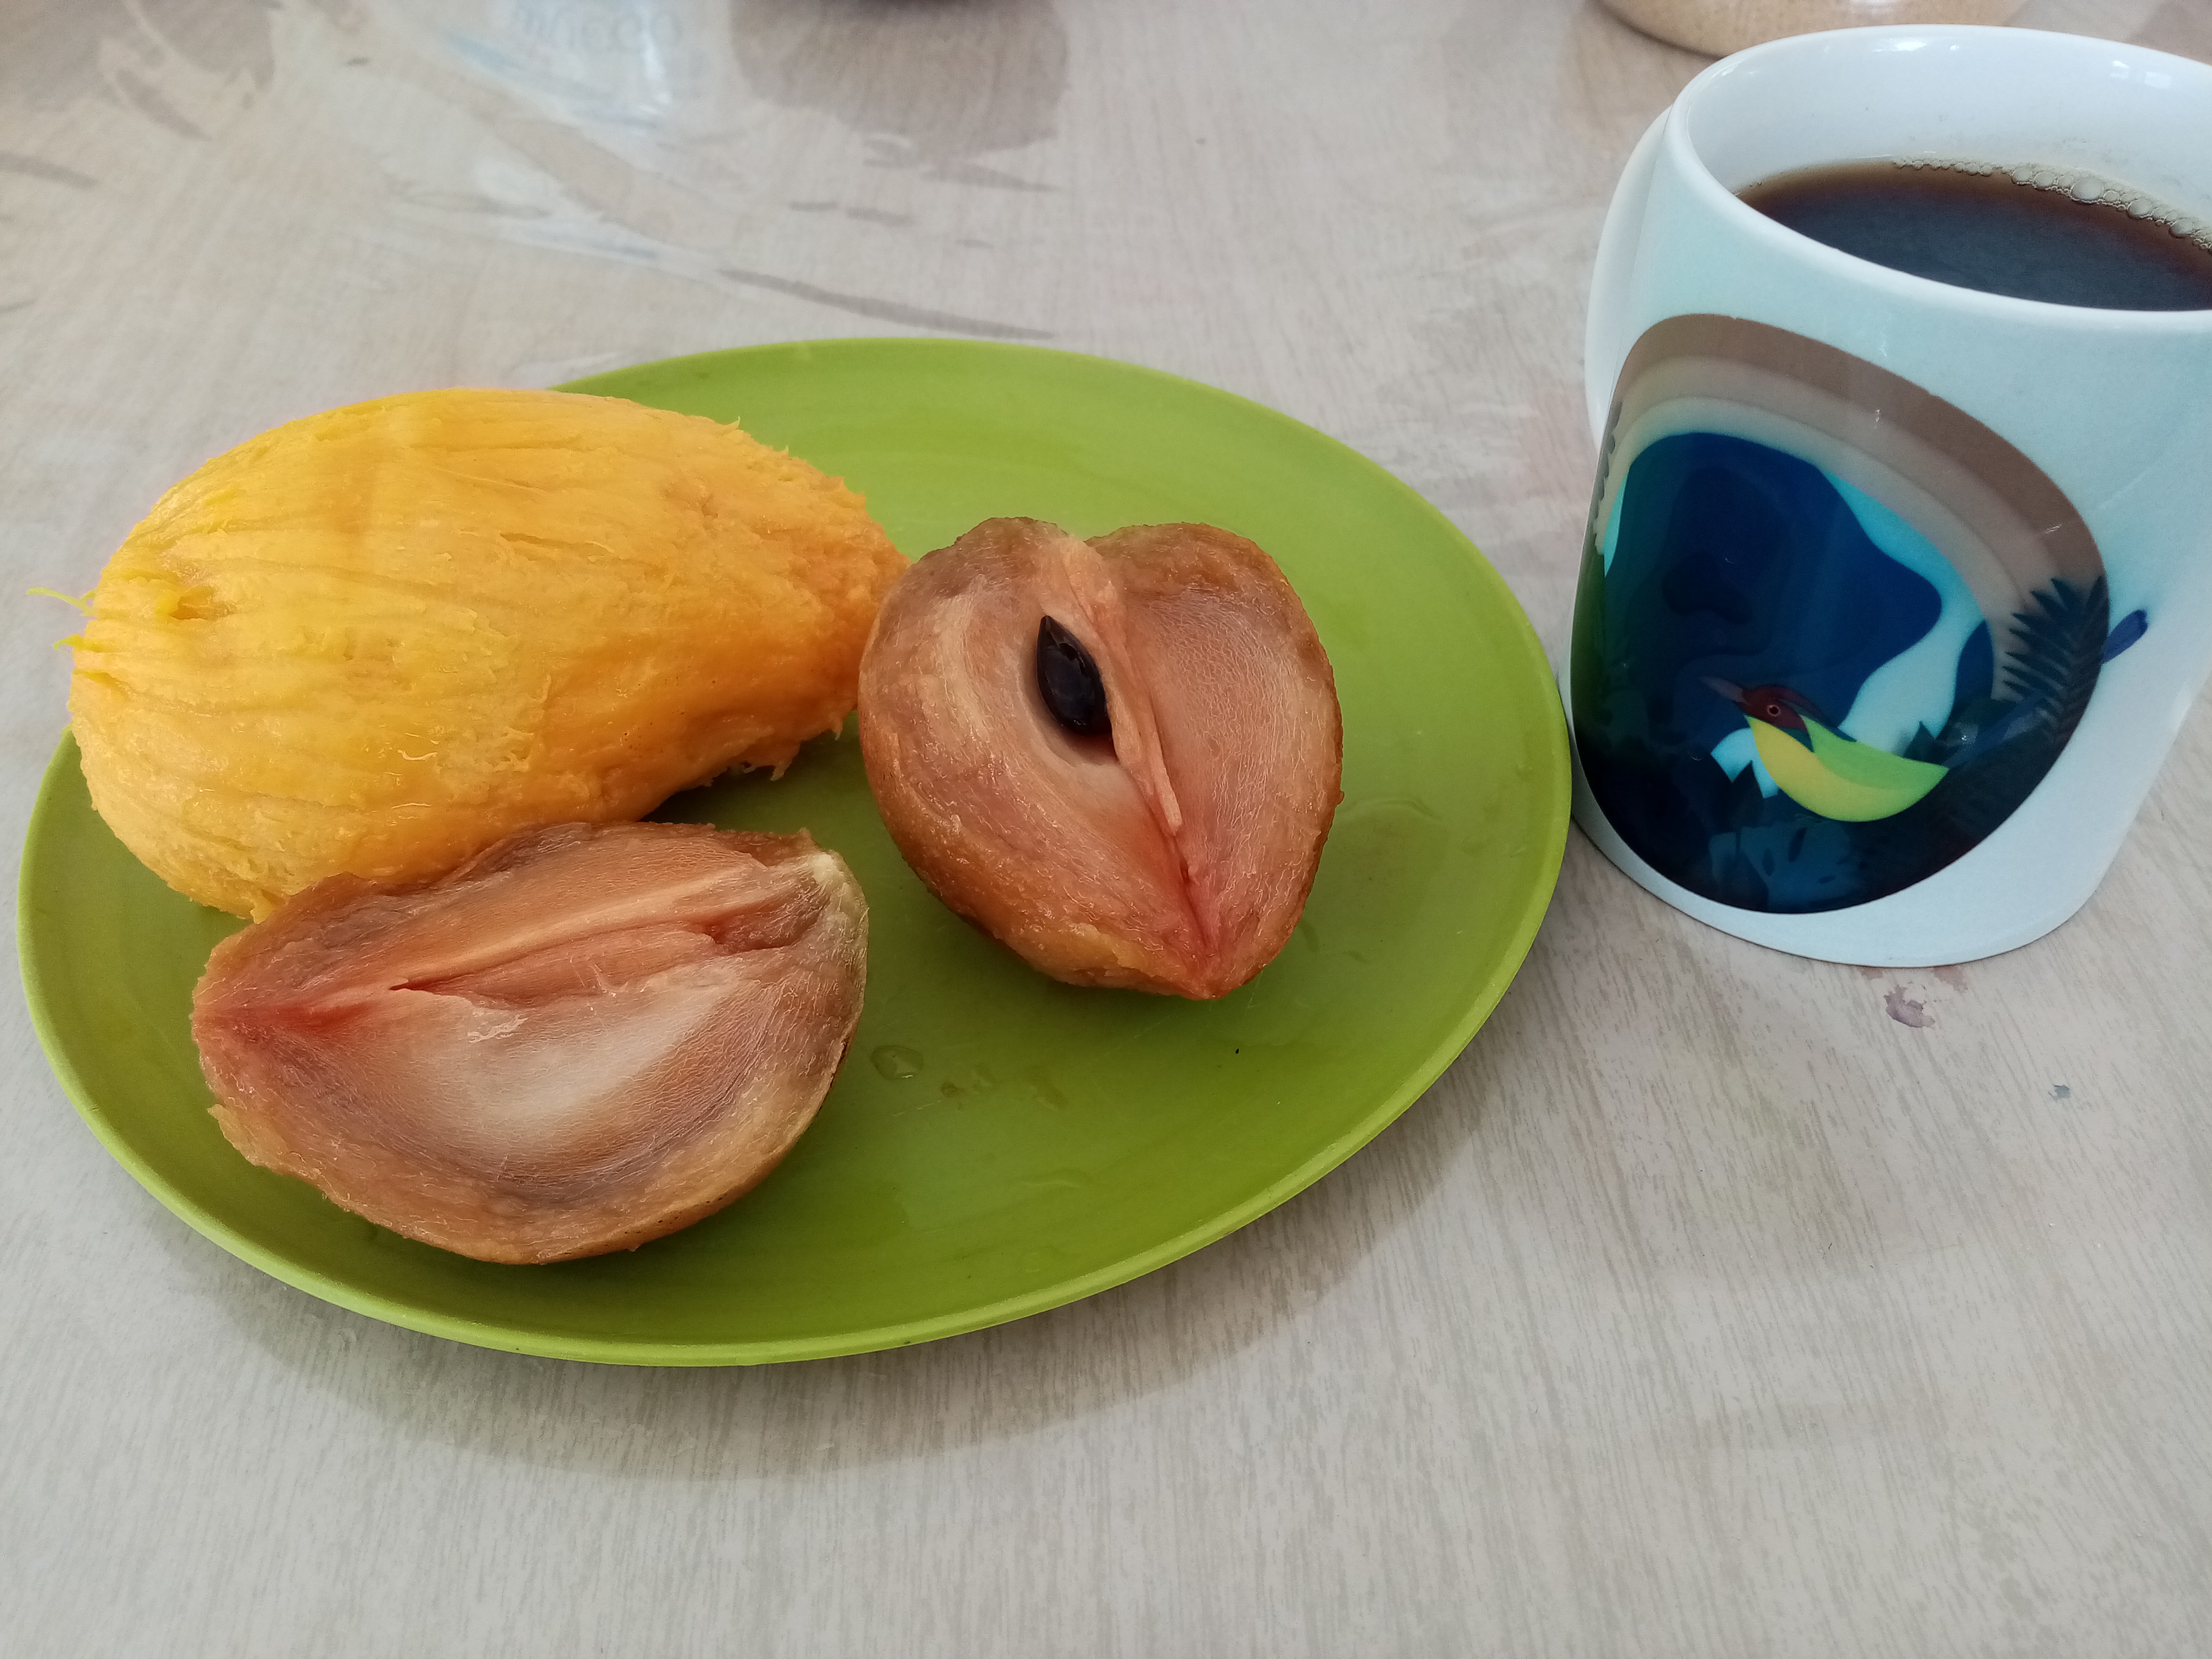 Fruit and a mug of coffee